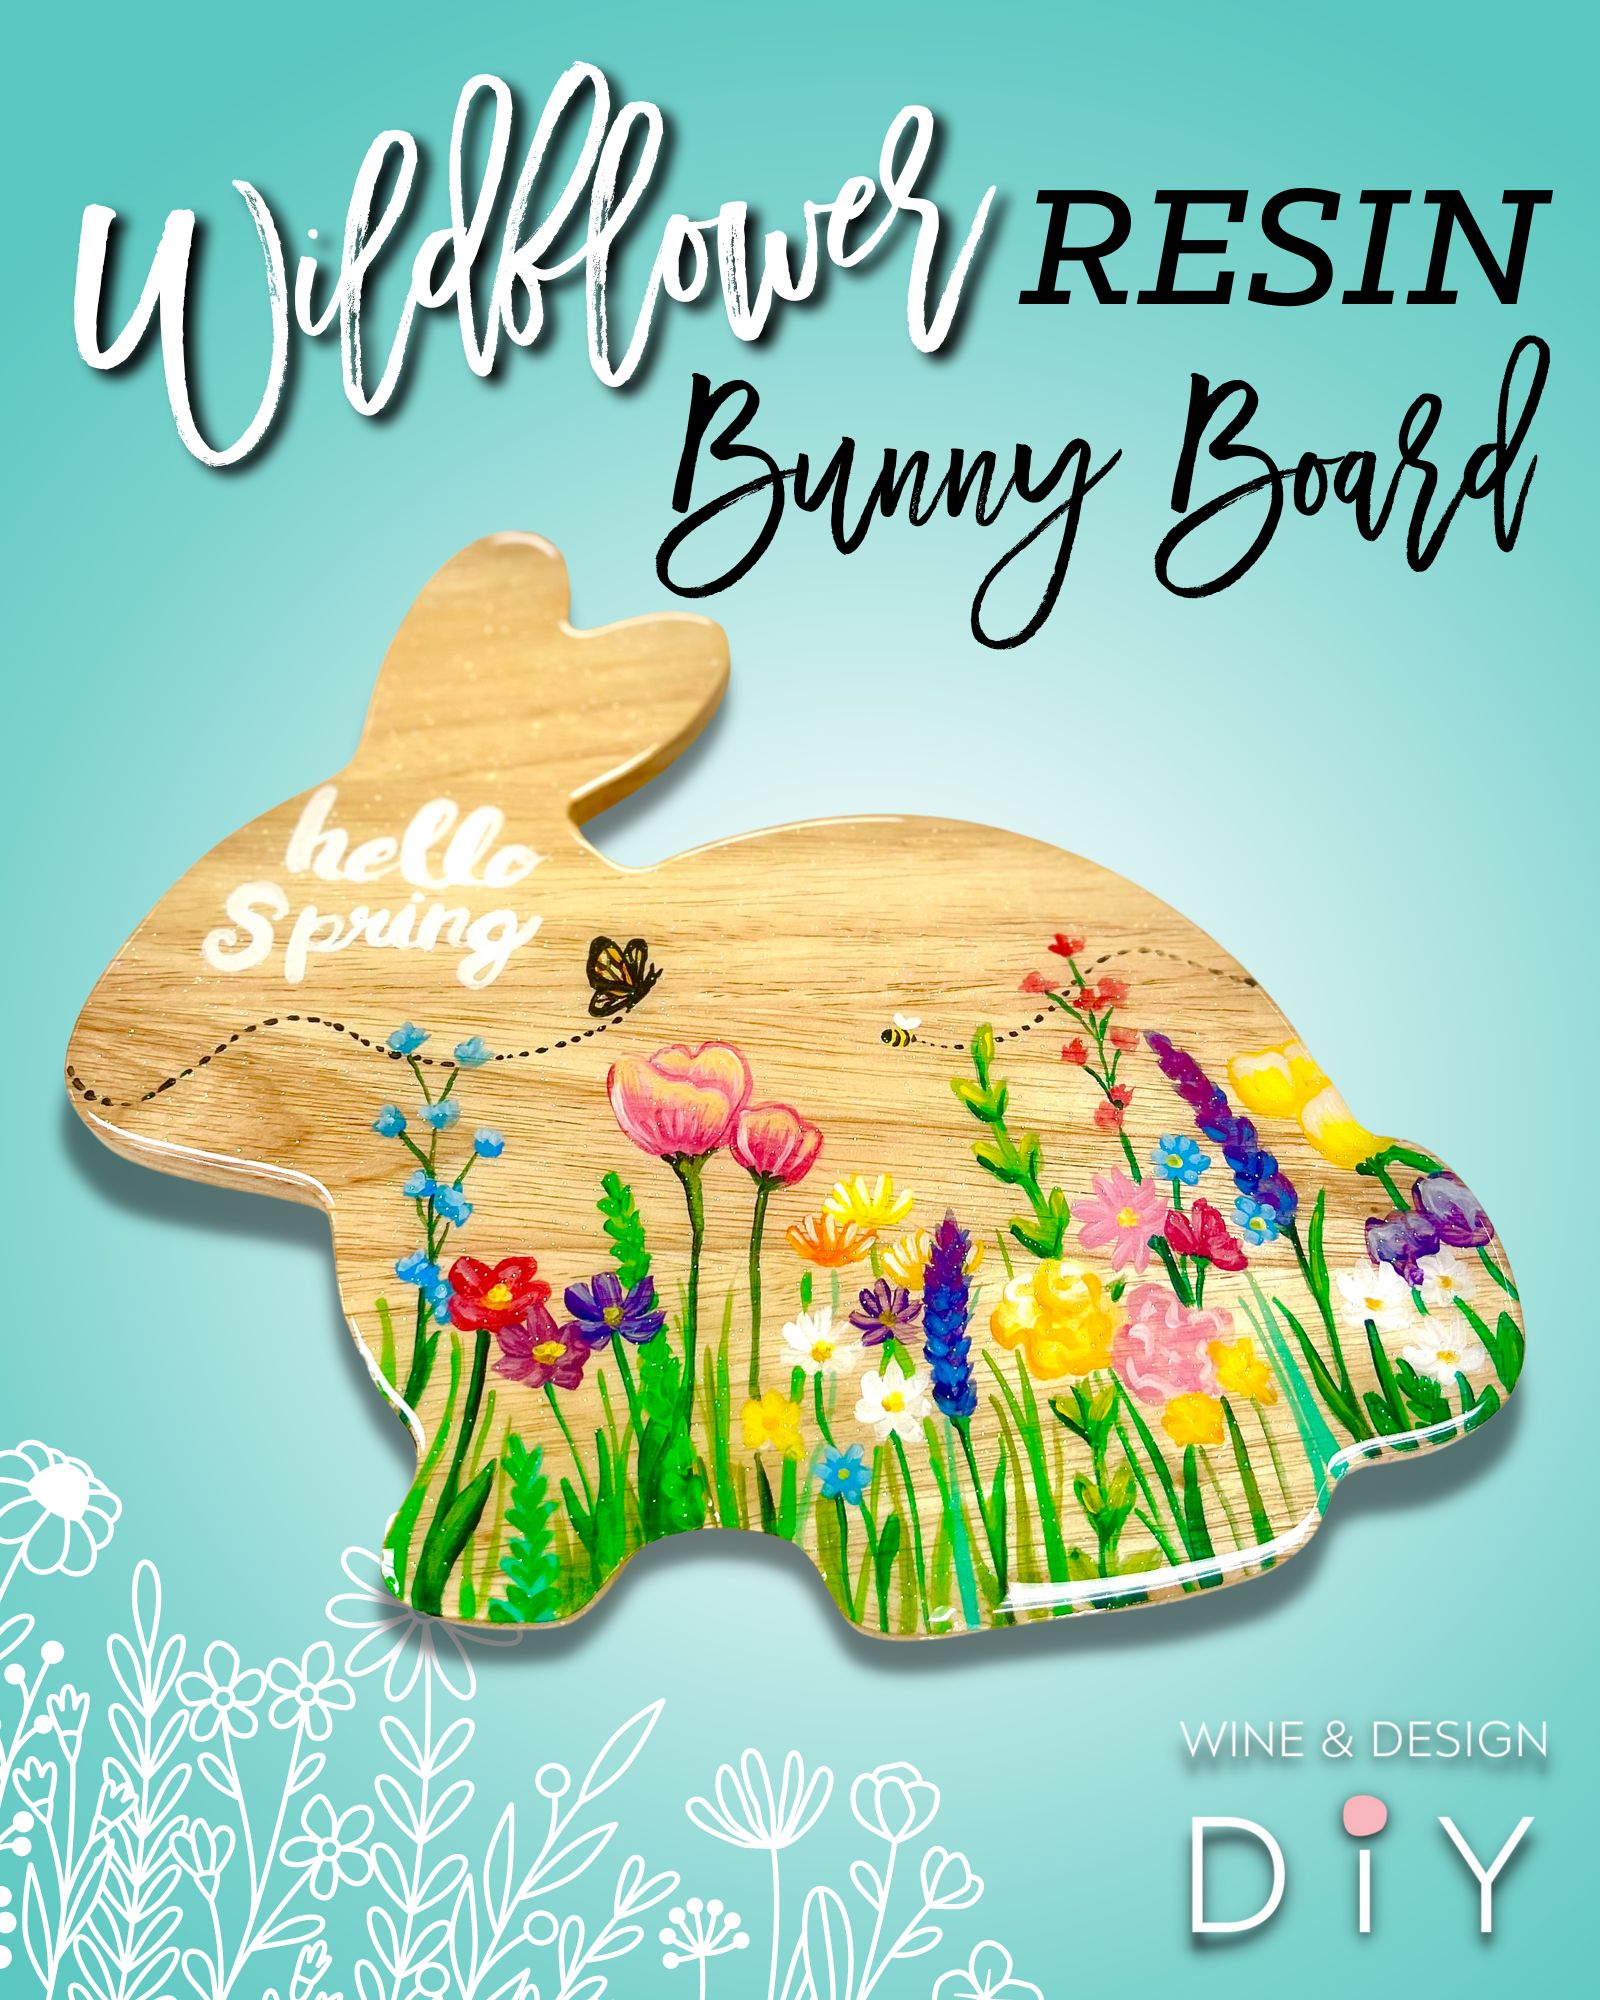 Wildflower Resin Bunny Board